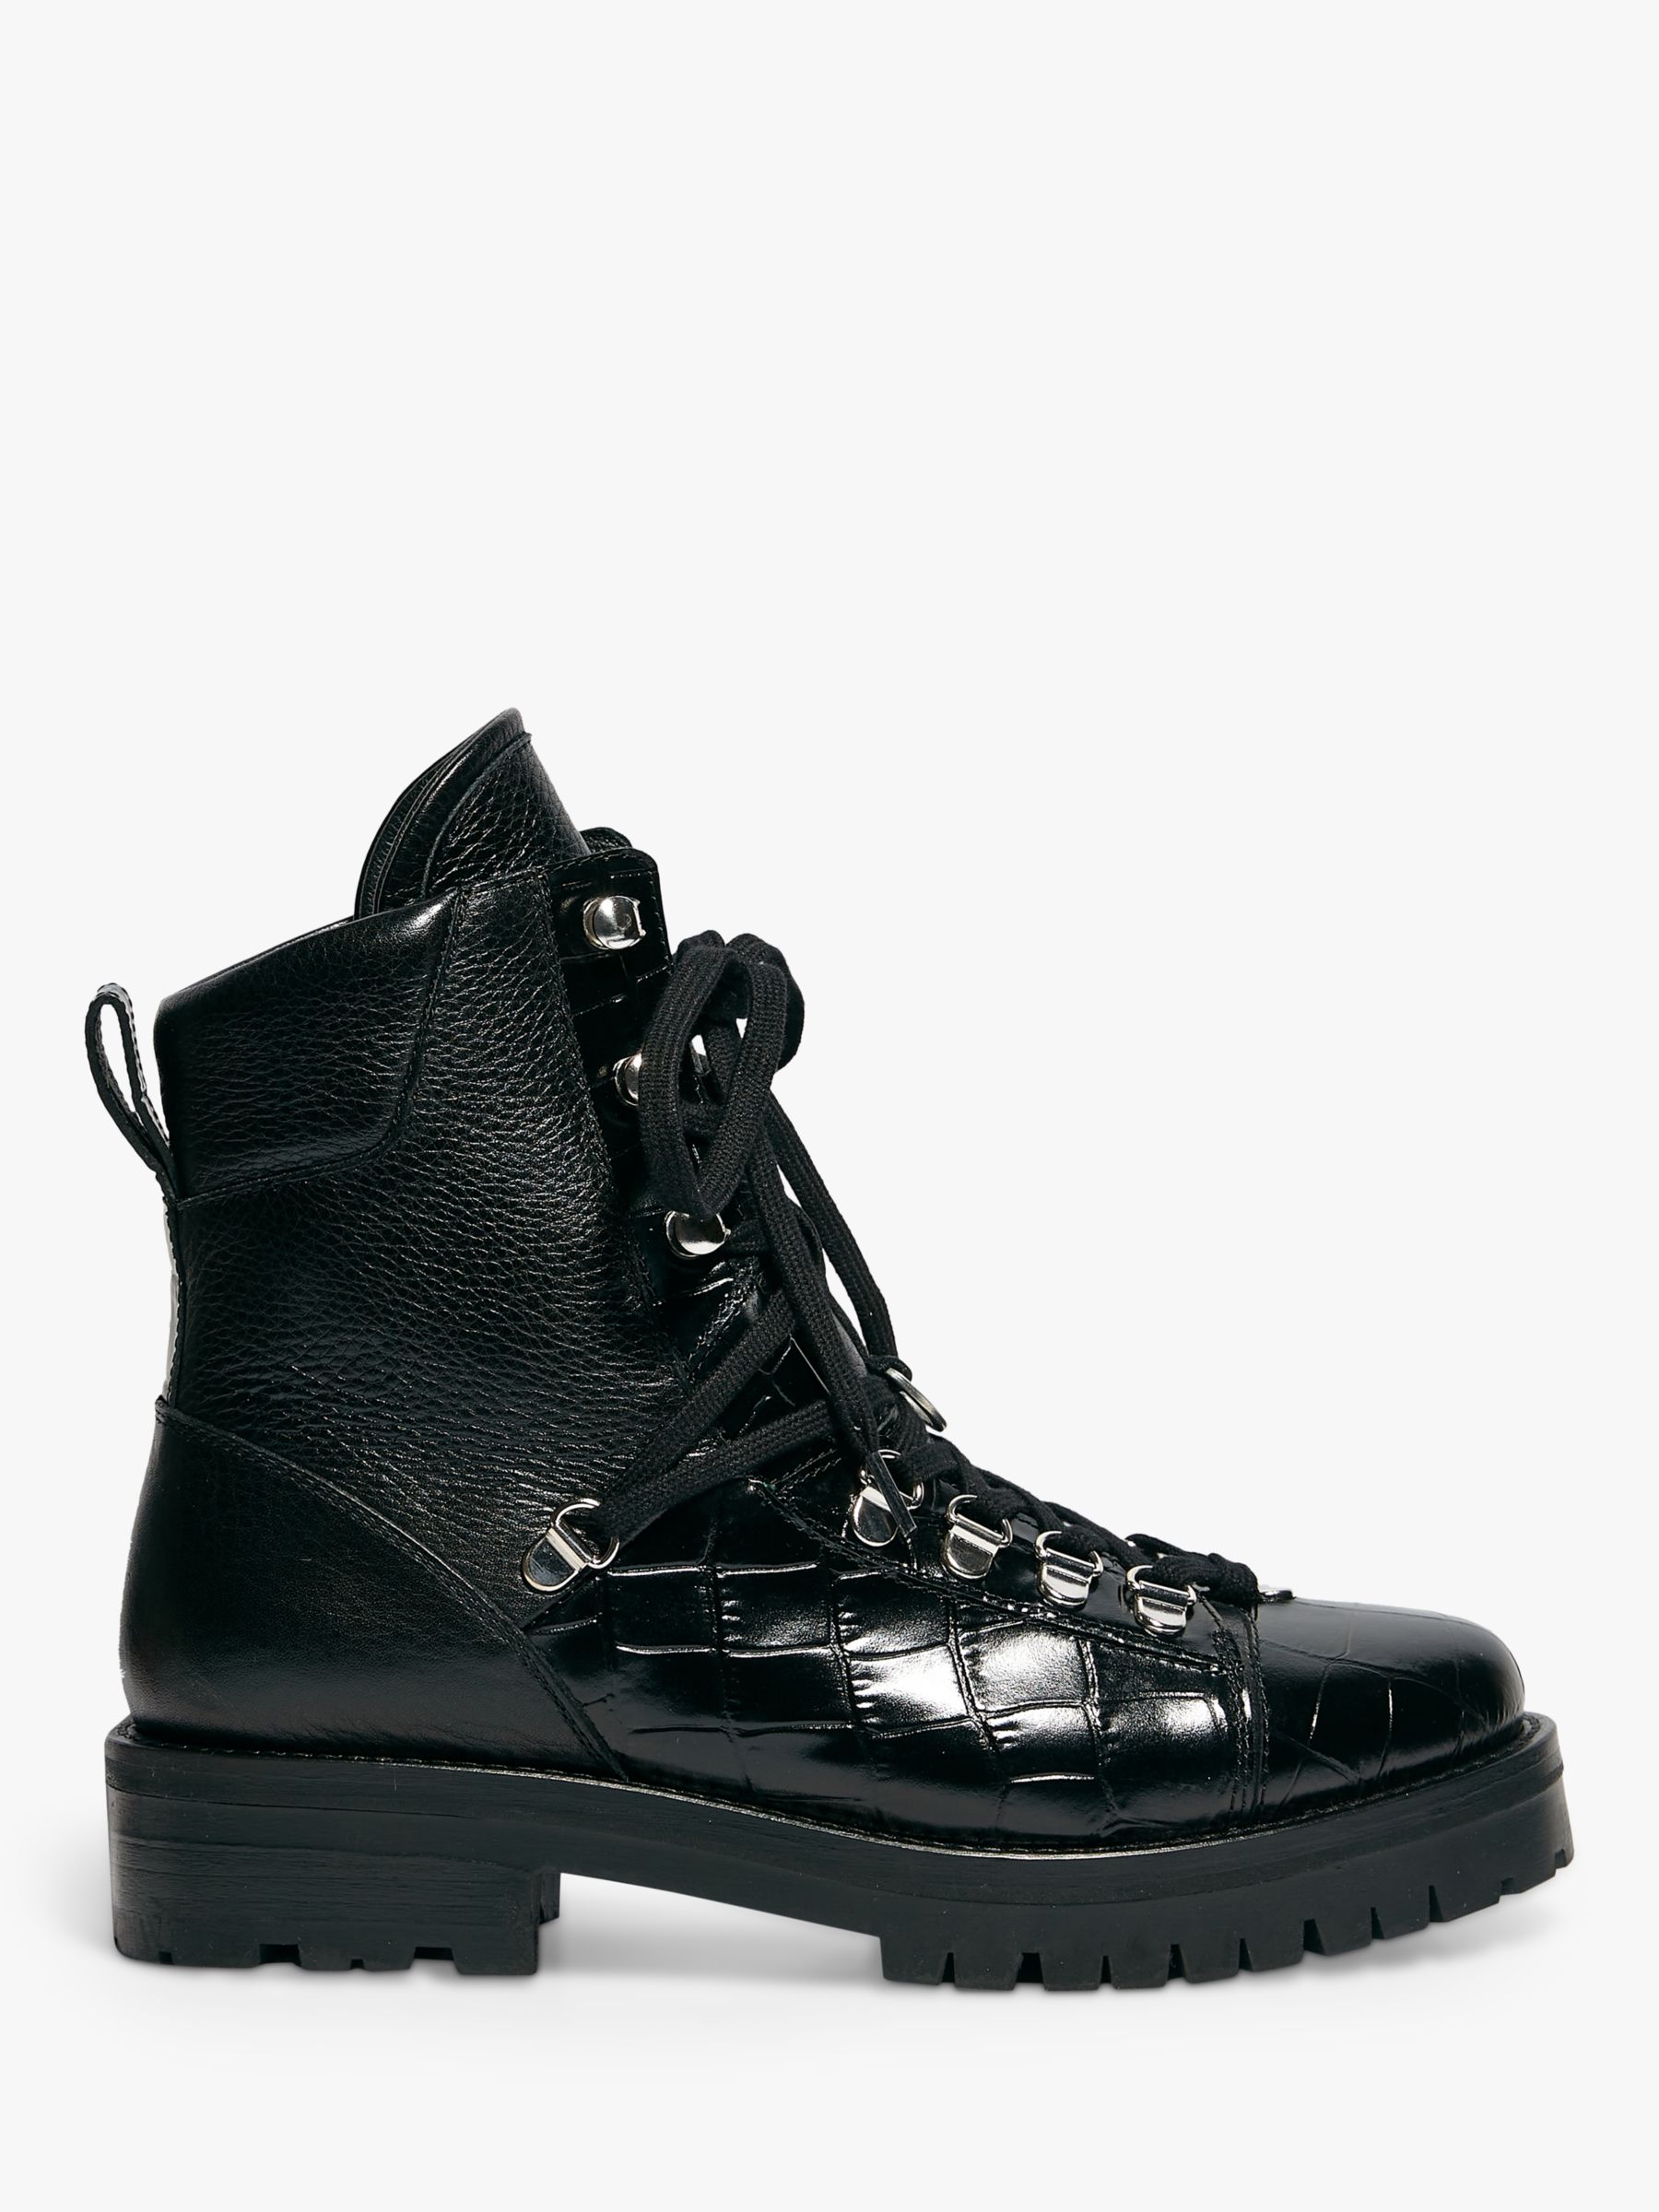 AllSaints Franka Leather Croc Ankle Boots, Black at John Lewis & Partners